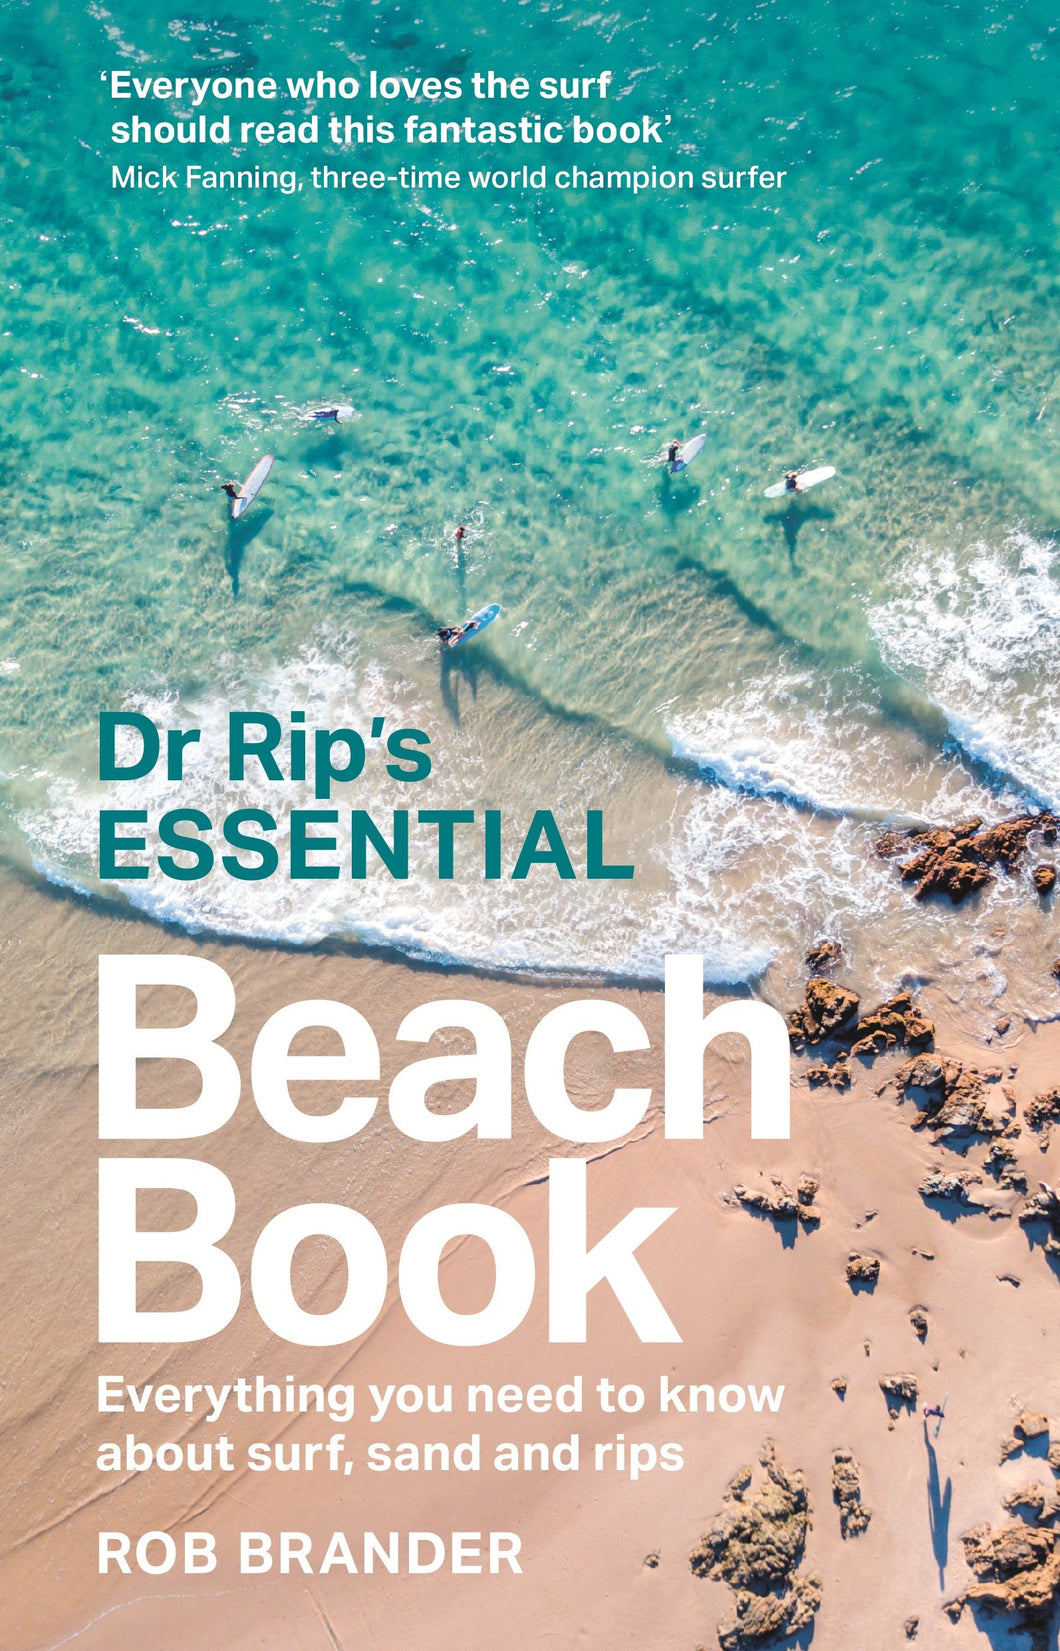 Dr Rip's Essential Beach Book by Rob Brander